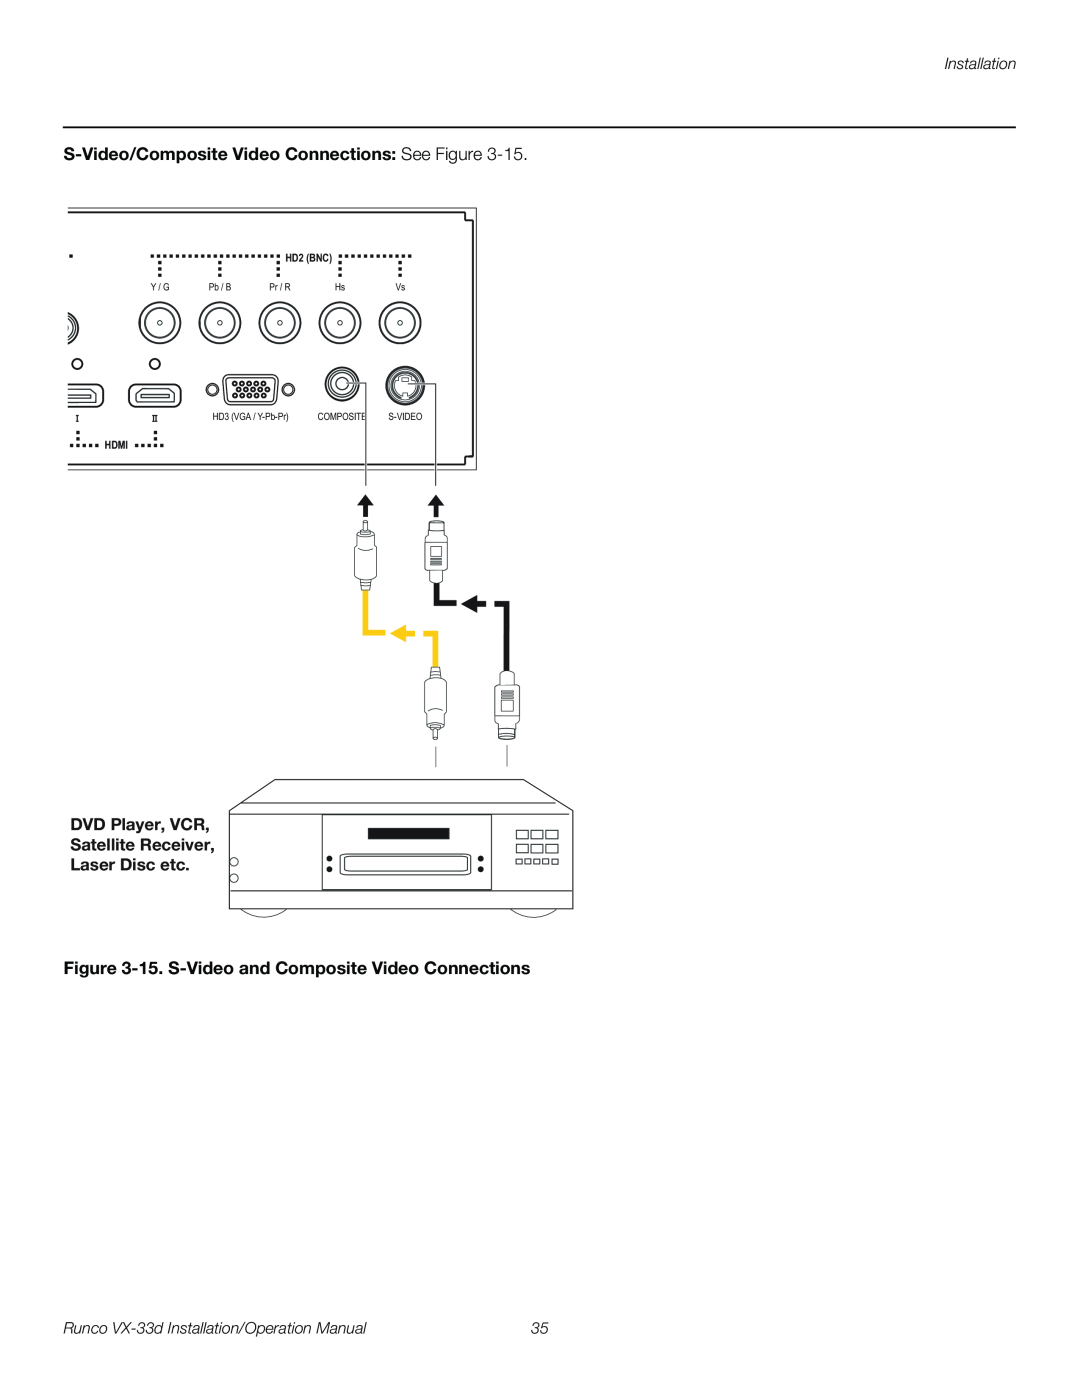 Runco VX-33D S-Video/Composite Video Connections See Figure, DVD Player, VCR Satellite Receiver Laser Disc etc, HD2 BNC 